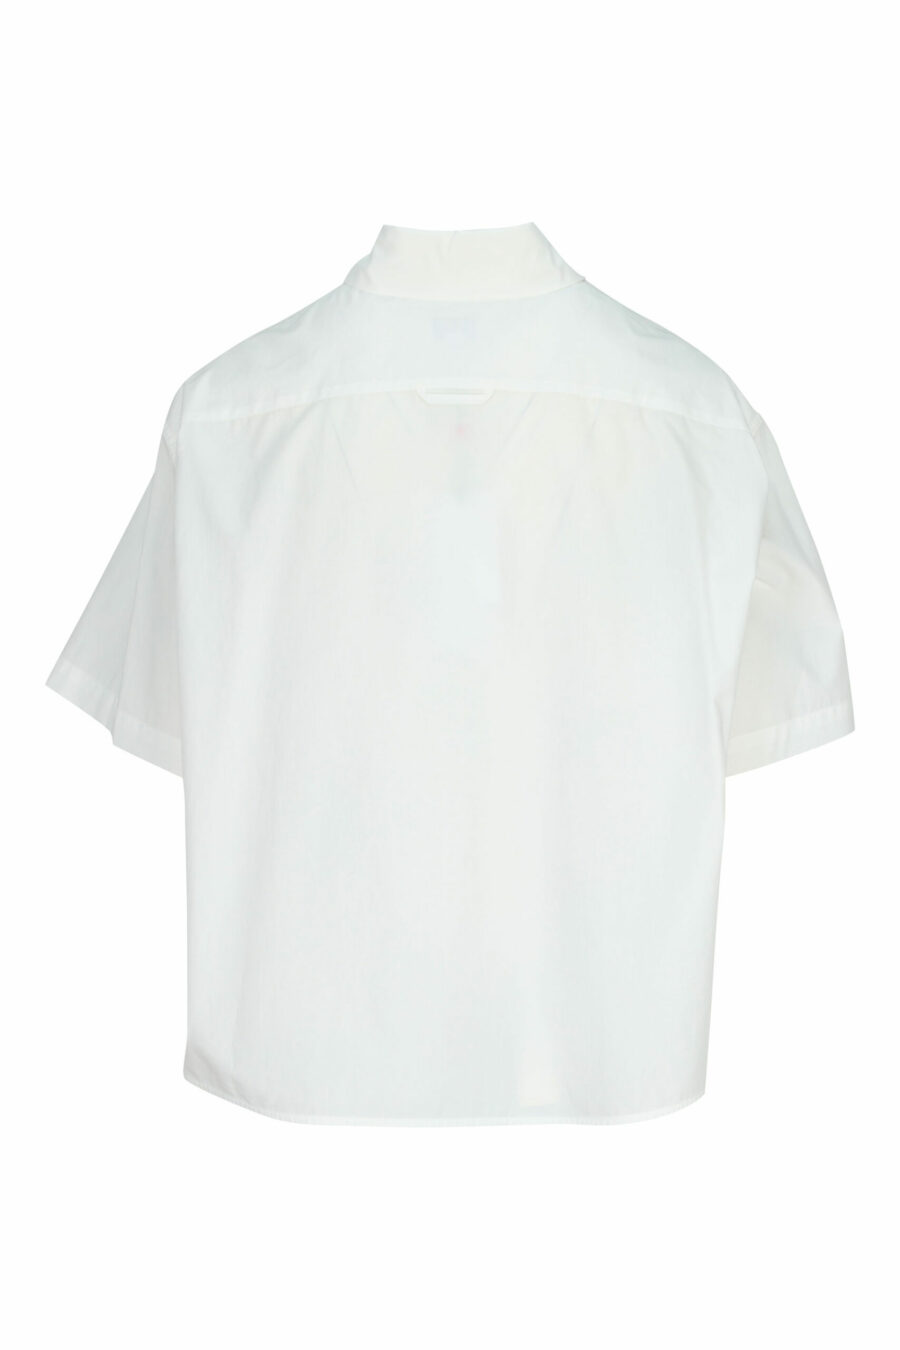 Camisa branca de manga curta com mini logótipo "boke flower" preto - 3612230589063 1 scaled